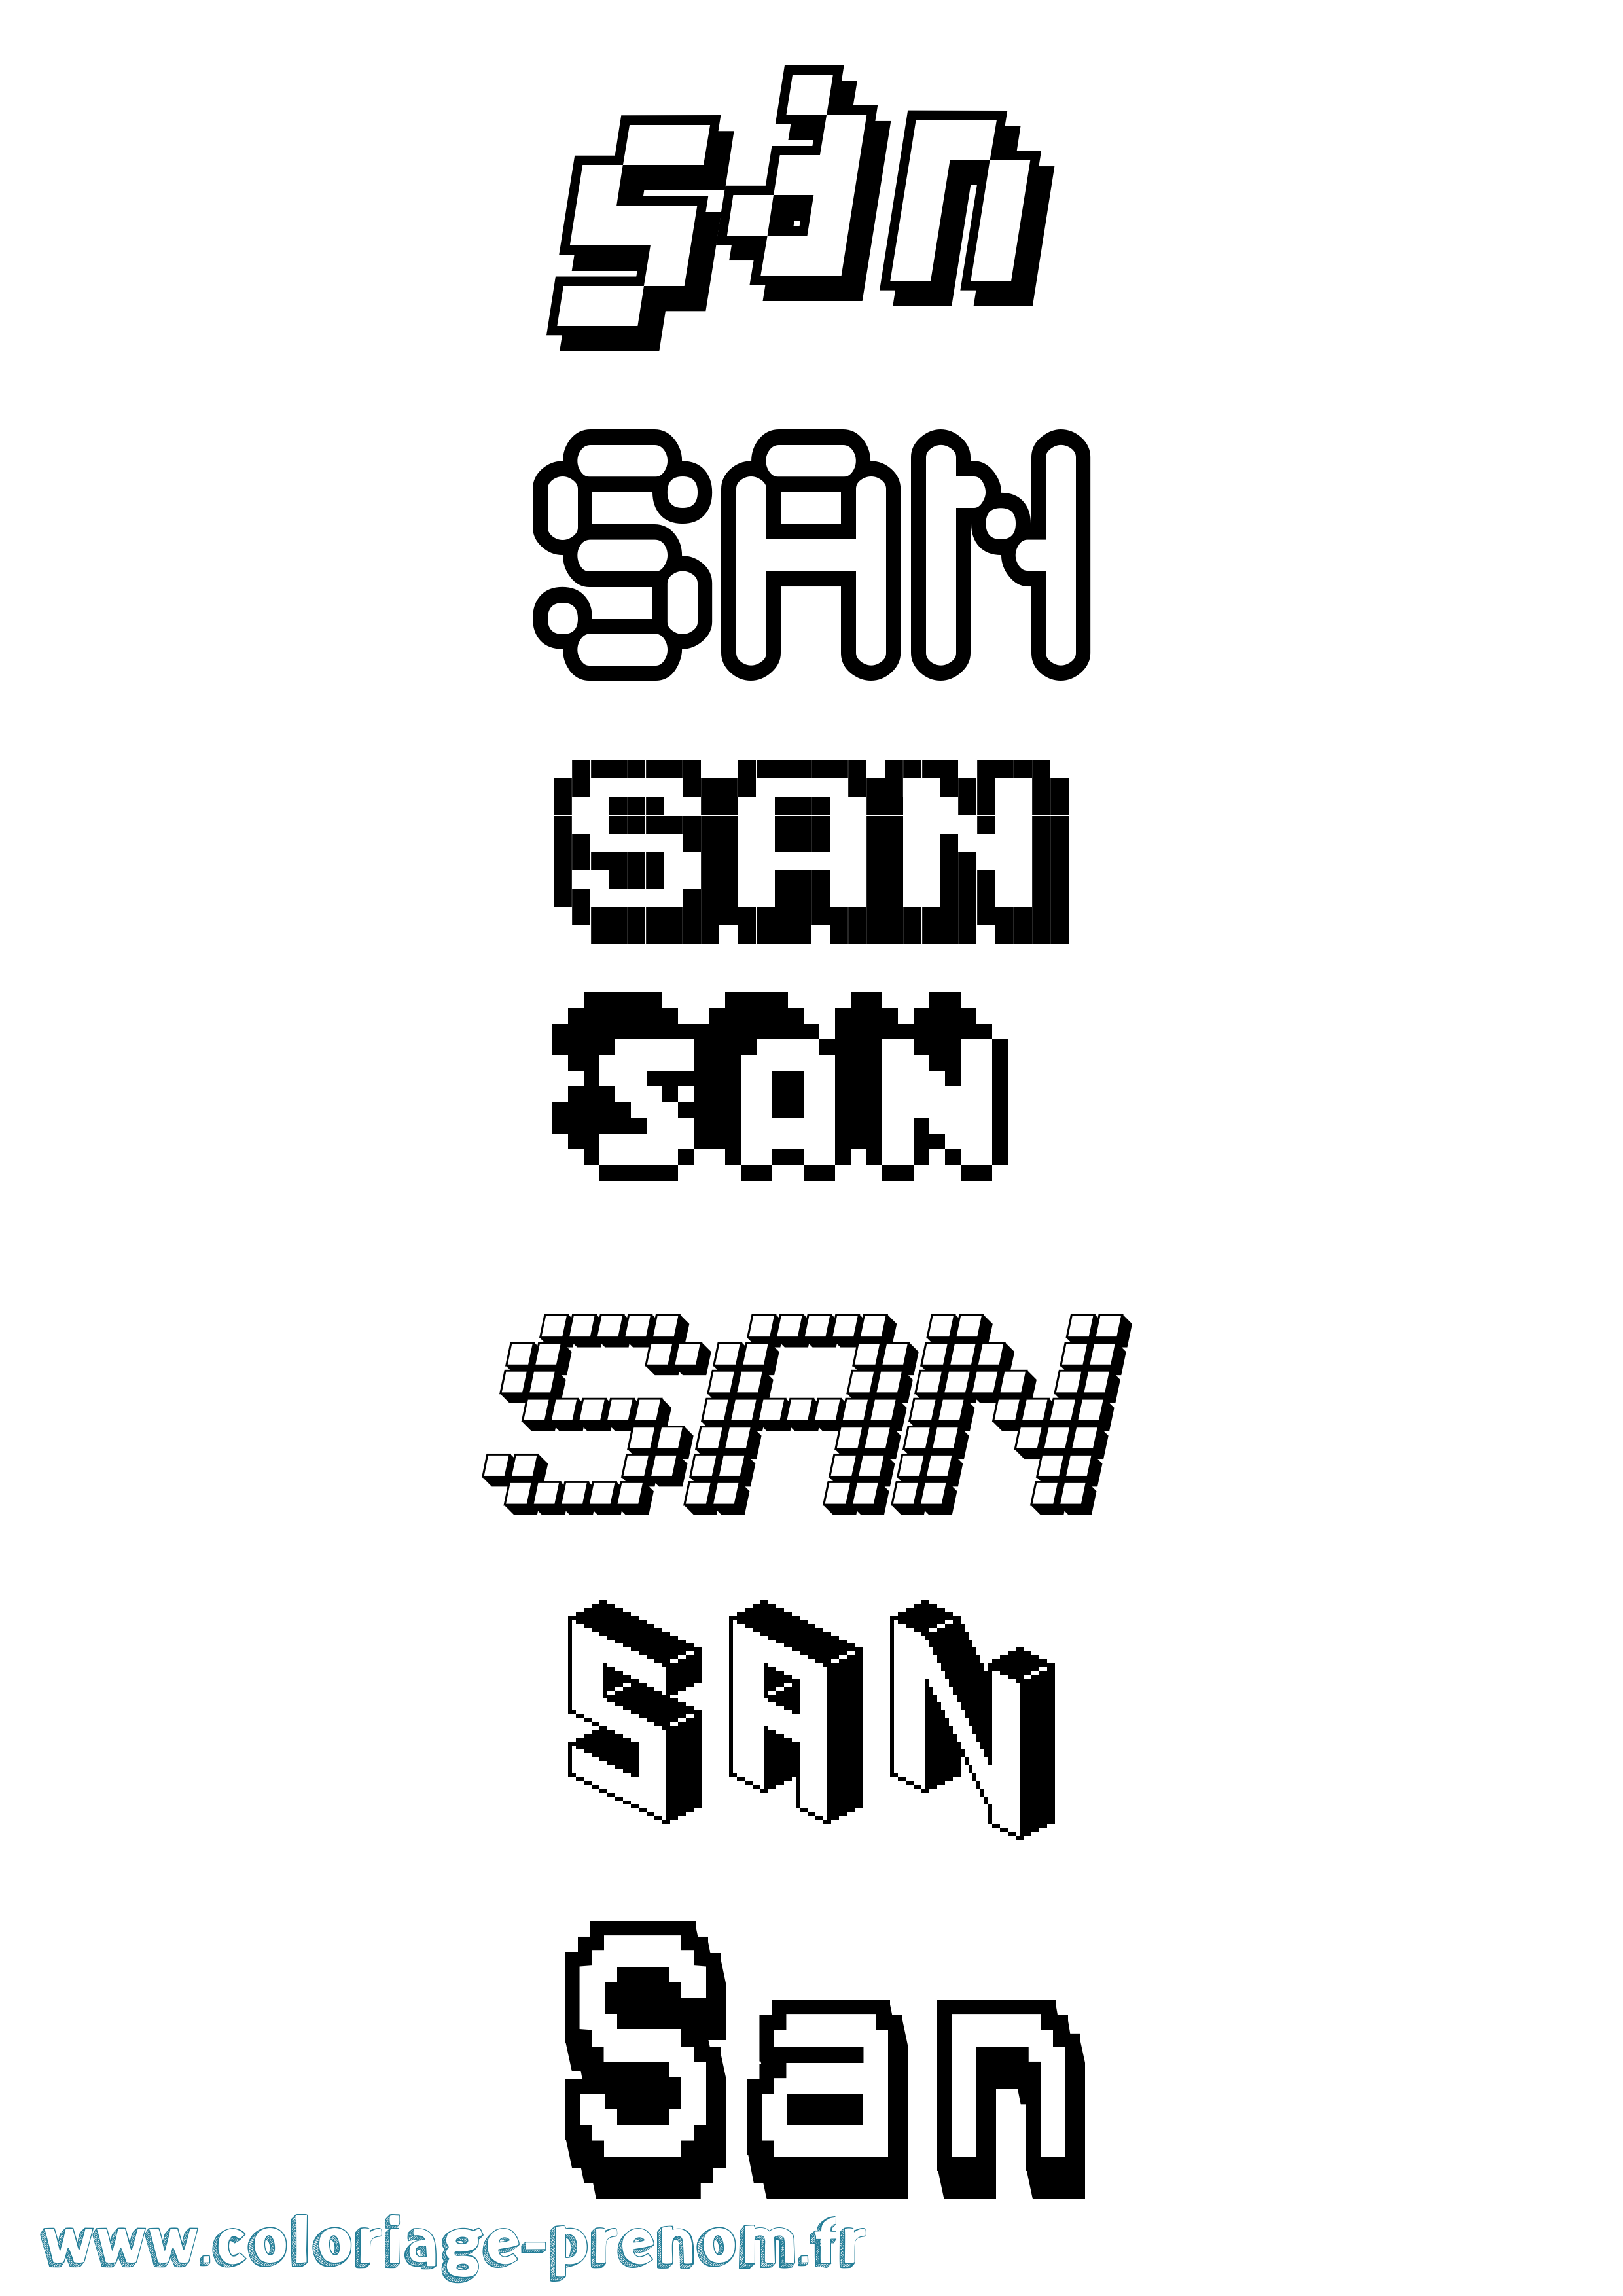 Coloriage prénom San Pixel